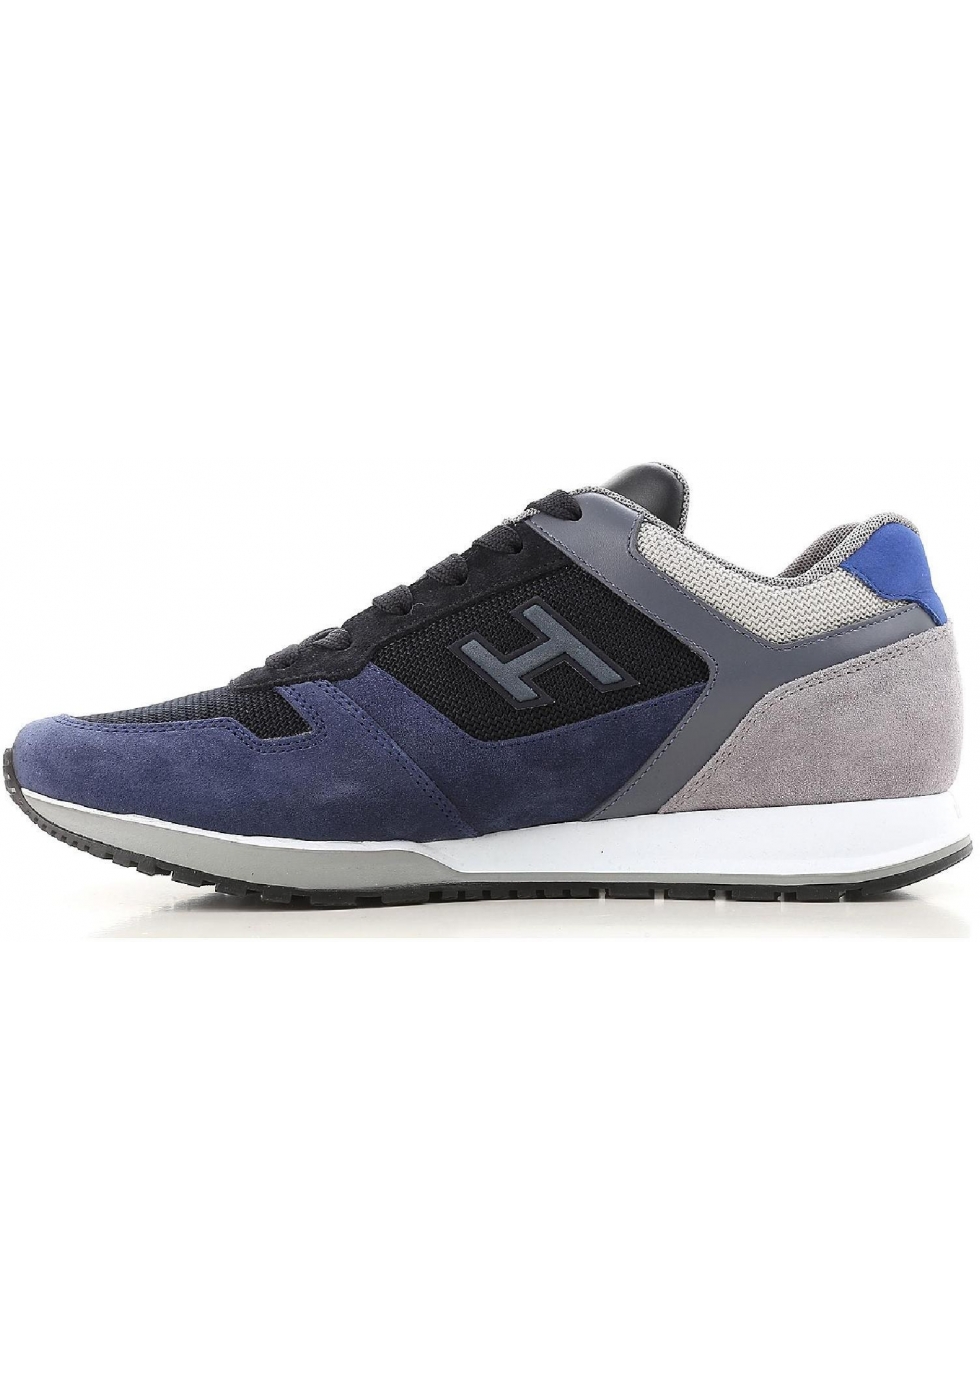 Hogan men's low top sneakers shoes in blue suede - Italian Boutique